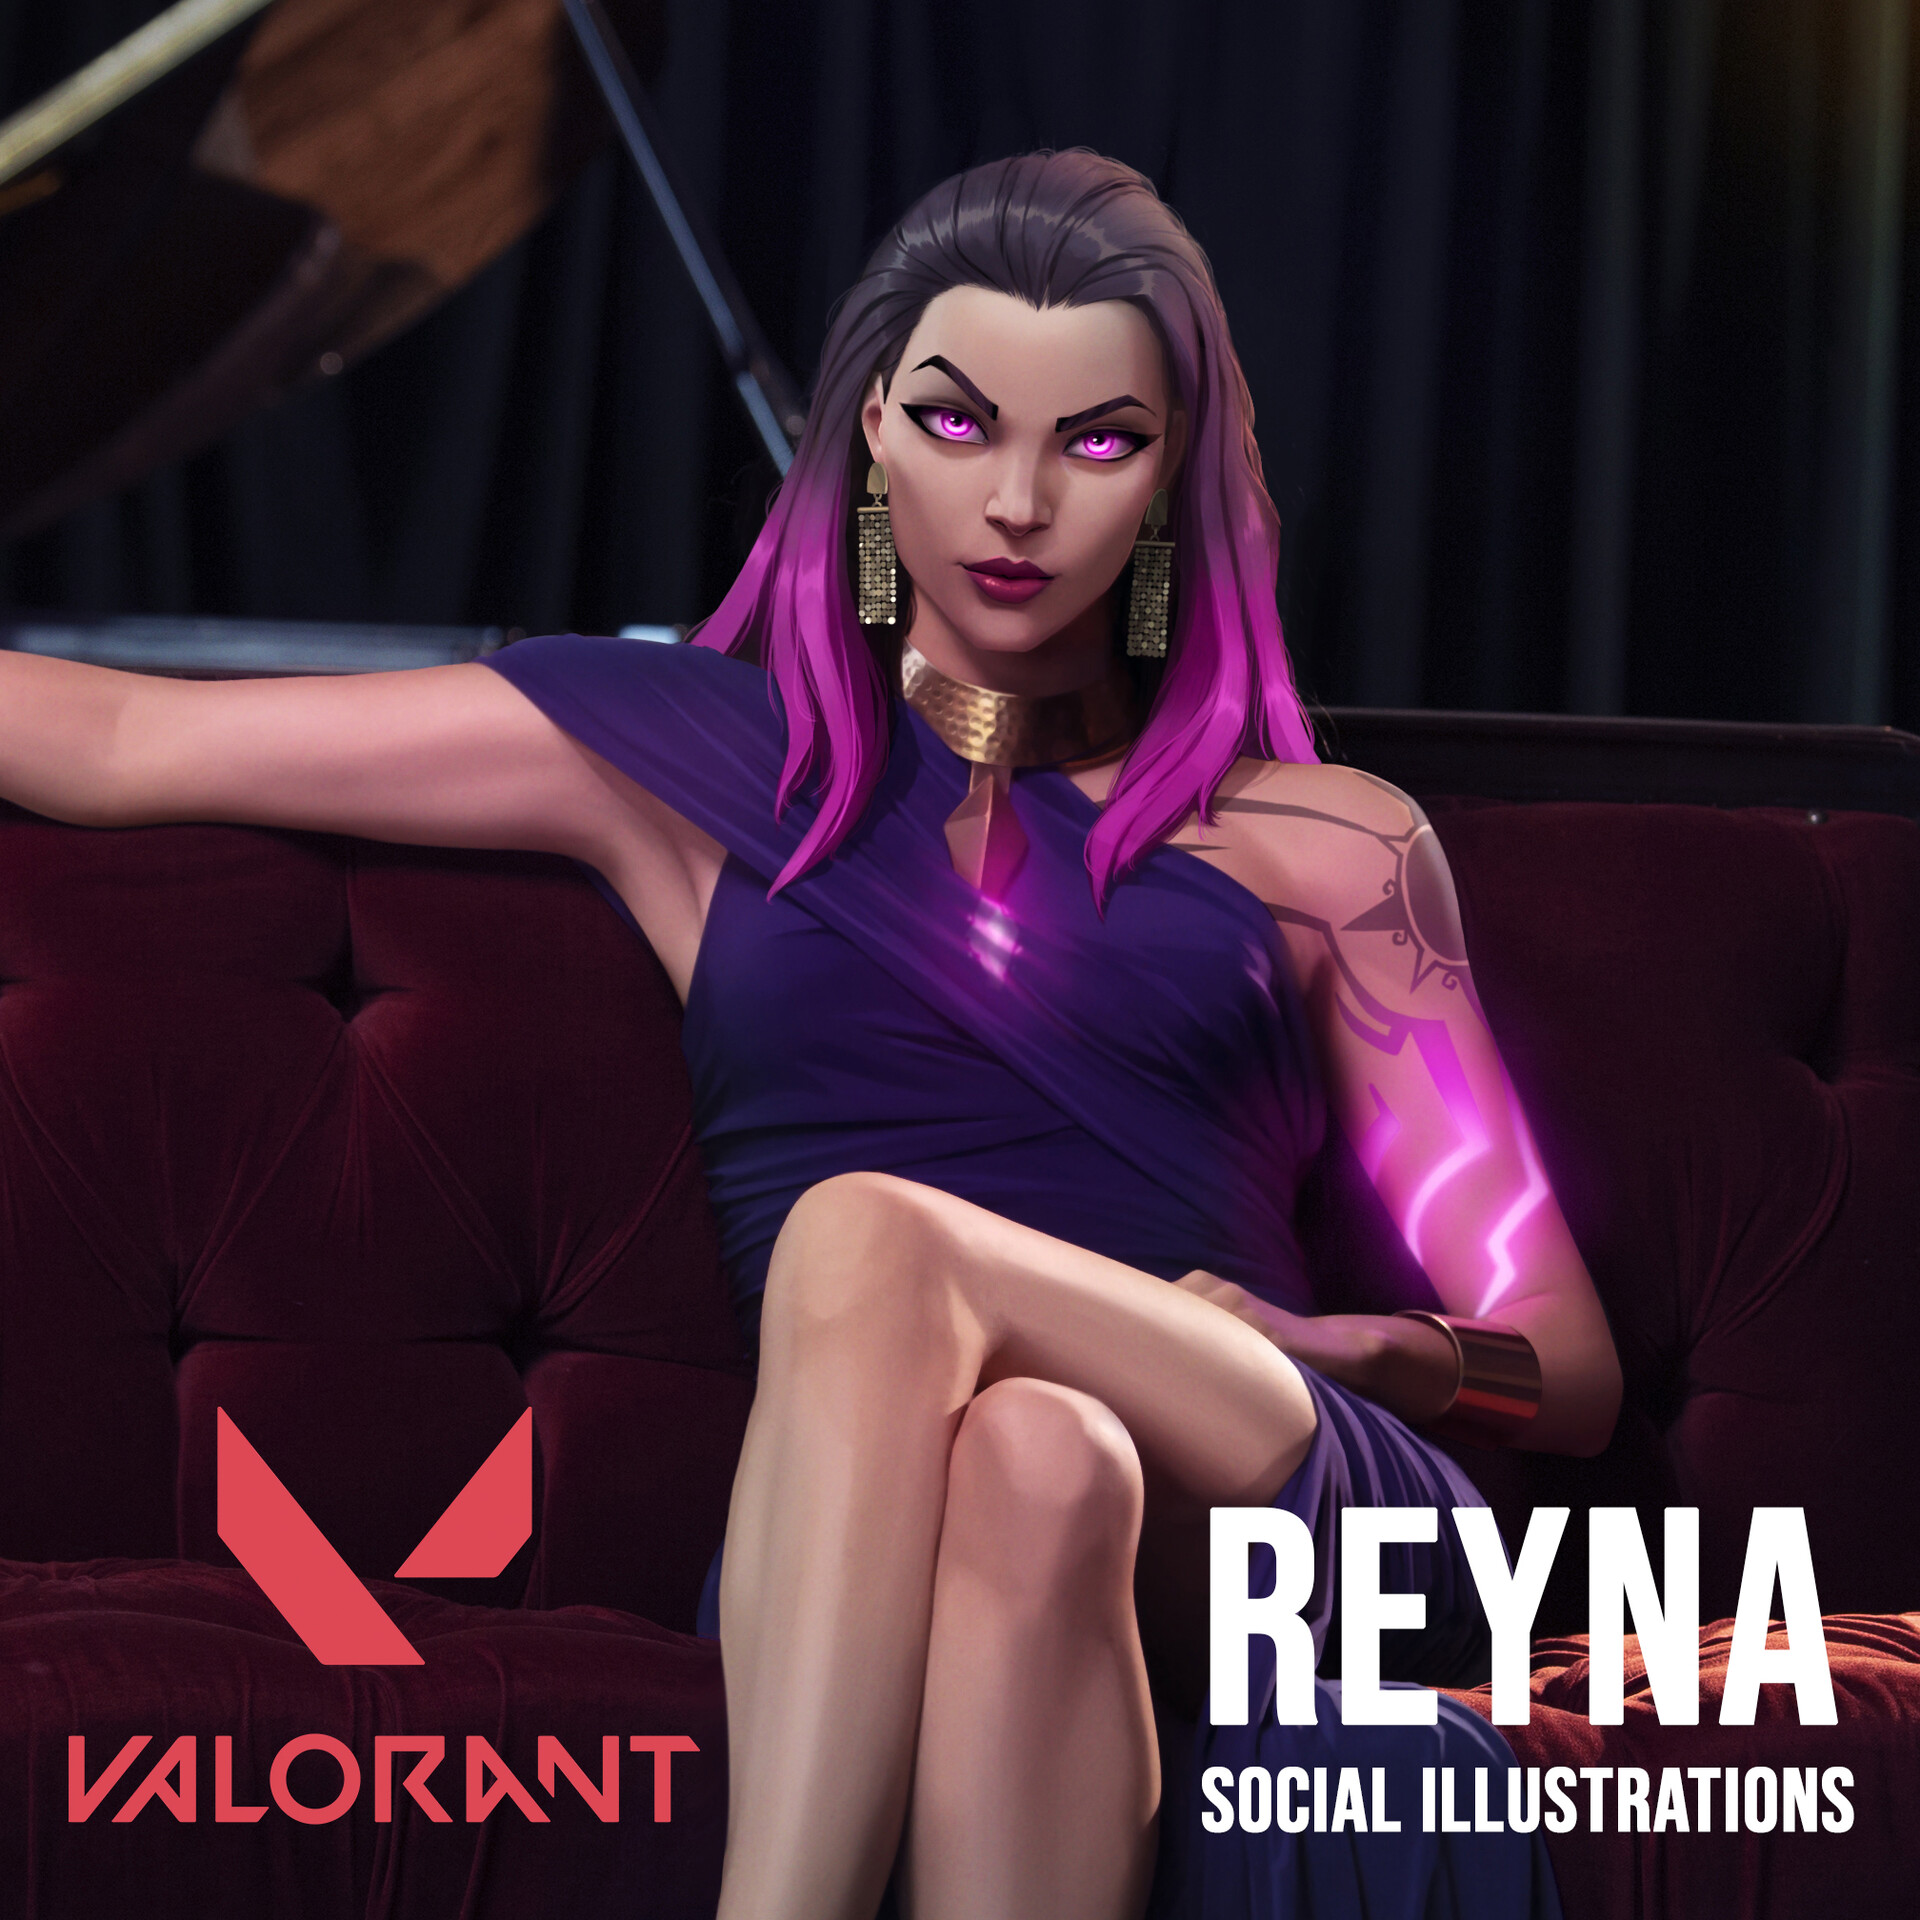 ArtStation - Reyna background/wallpaper